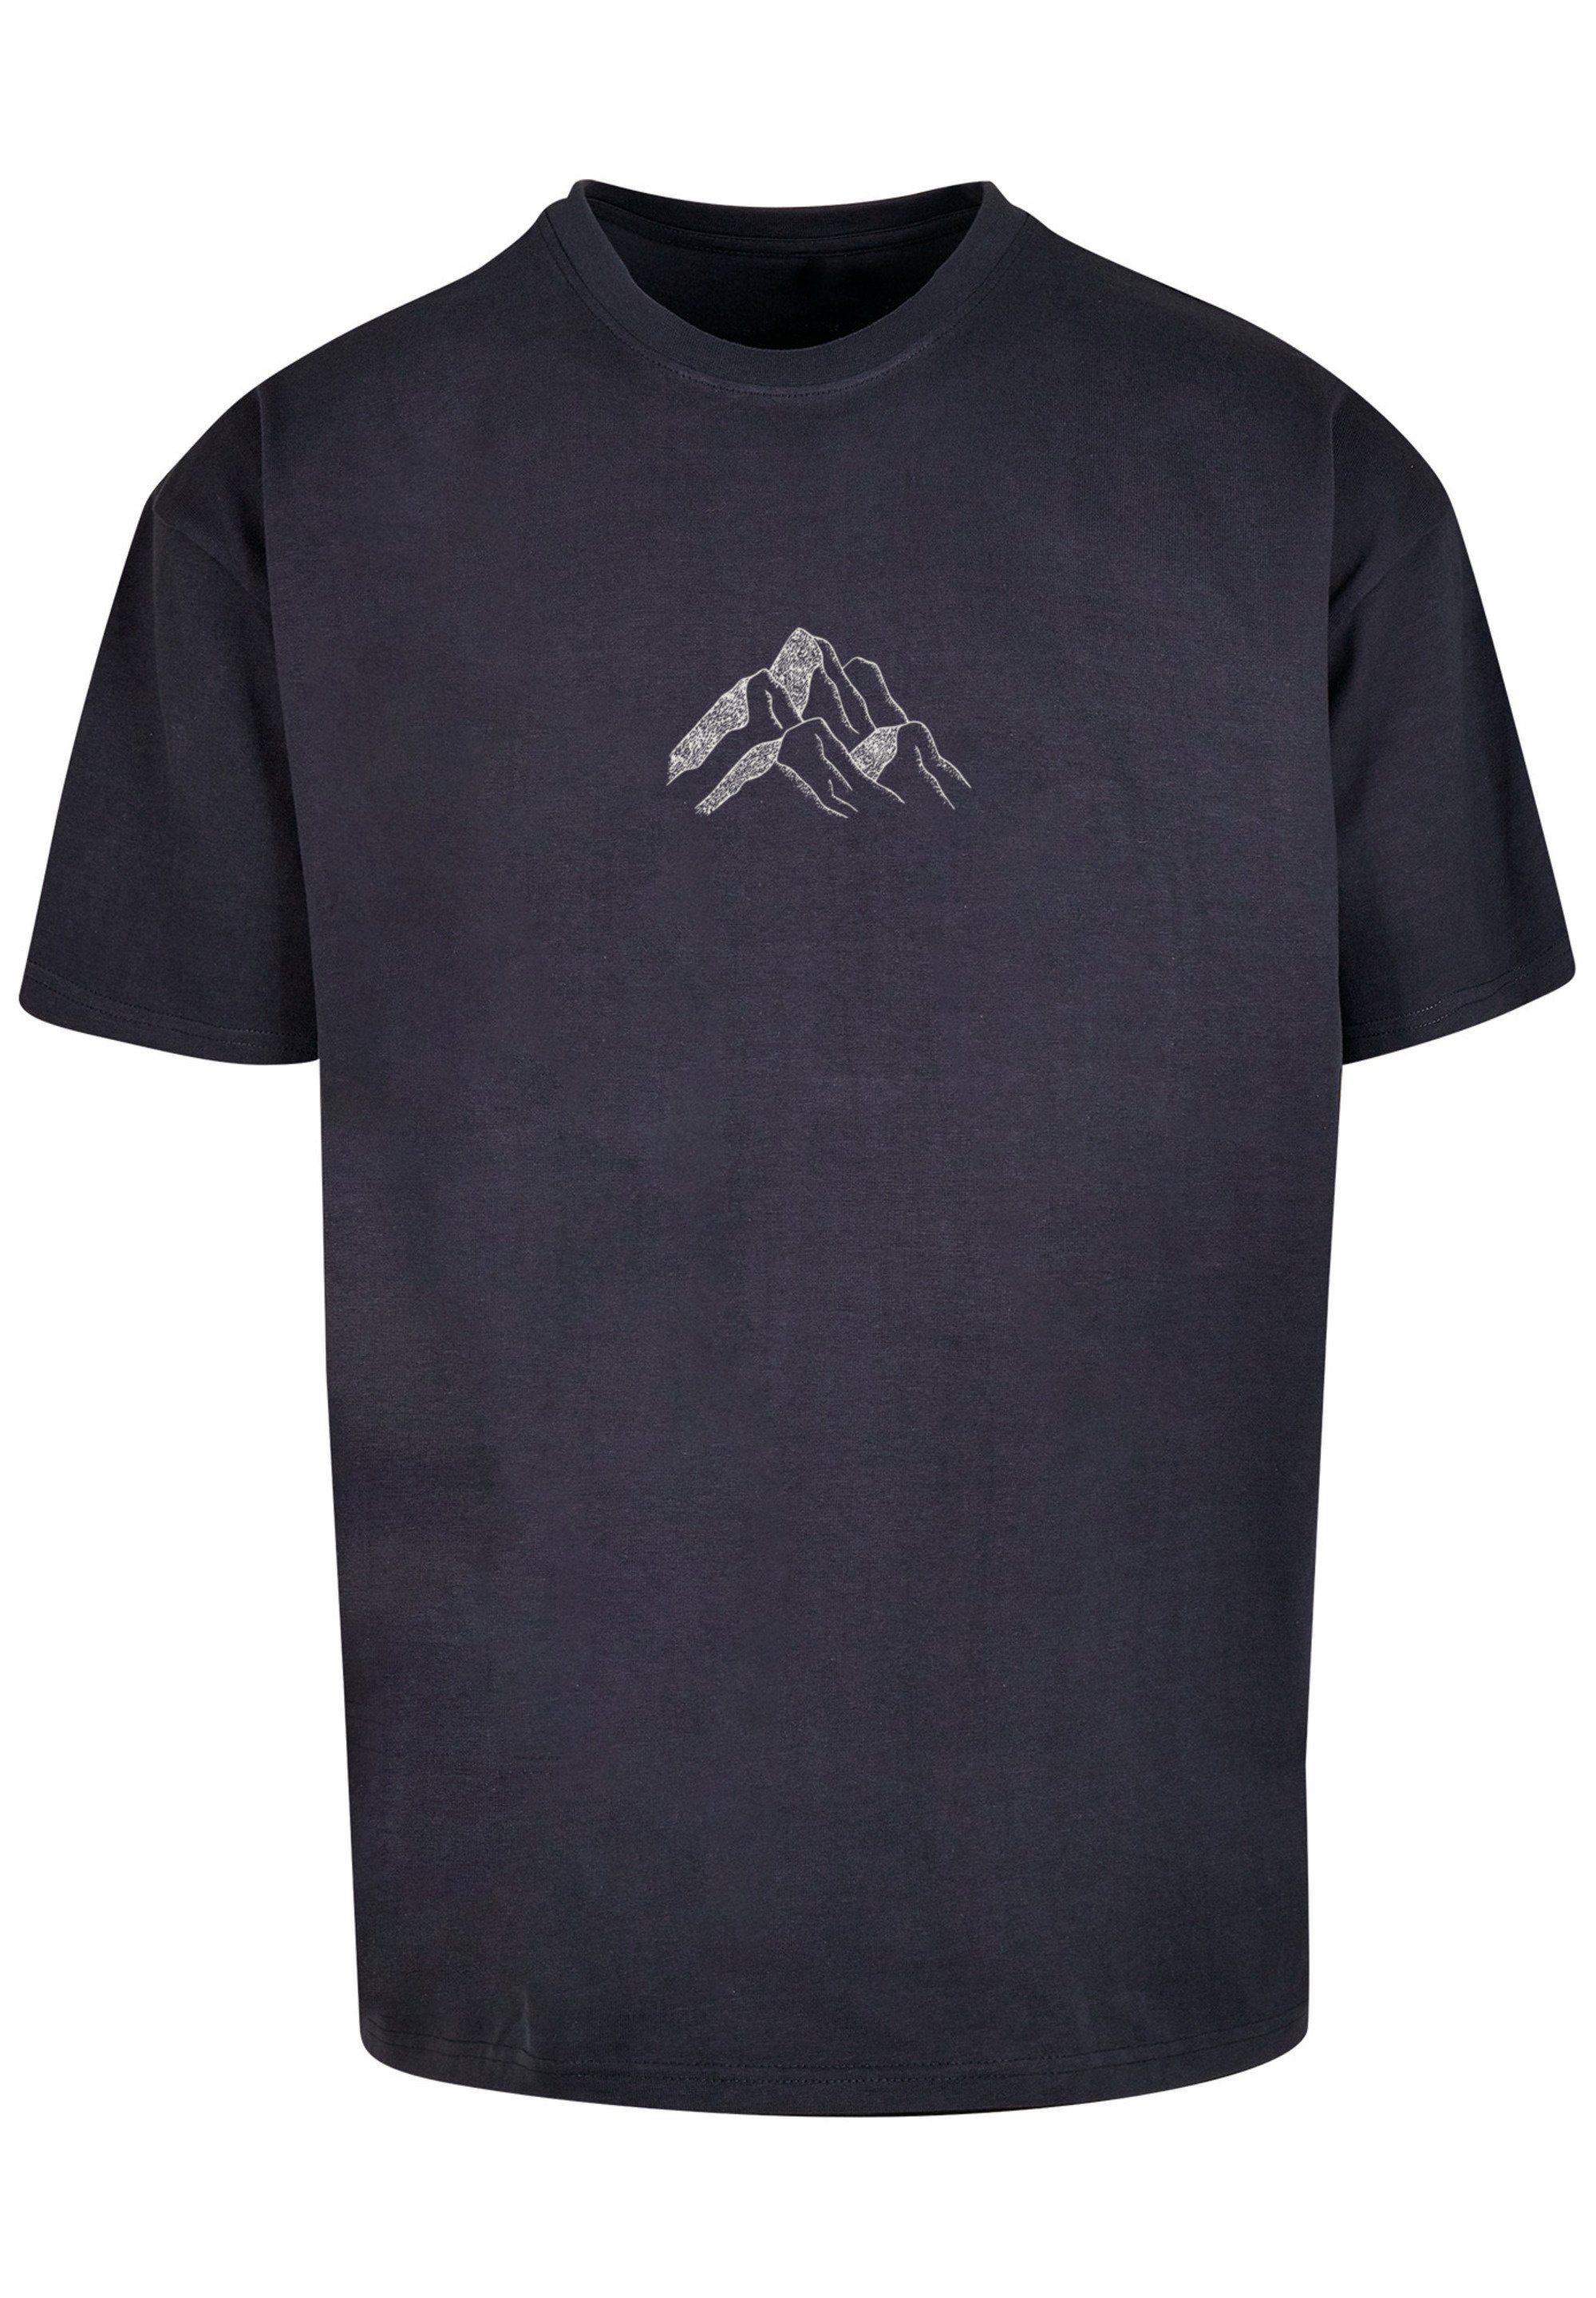 F4NT4STIC T-Shirt Mountain Berge Urlaub Schnee Ski Print navy Winter